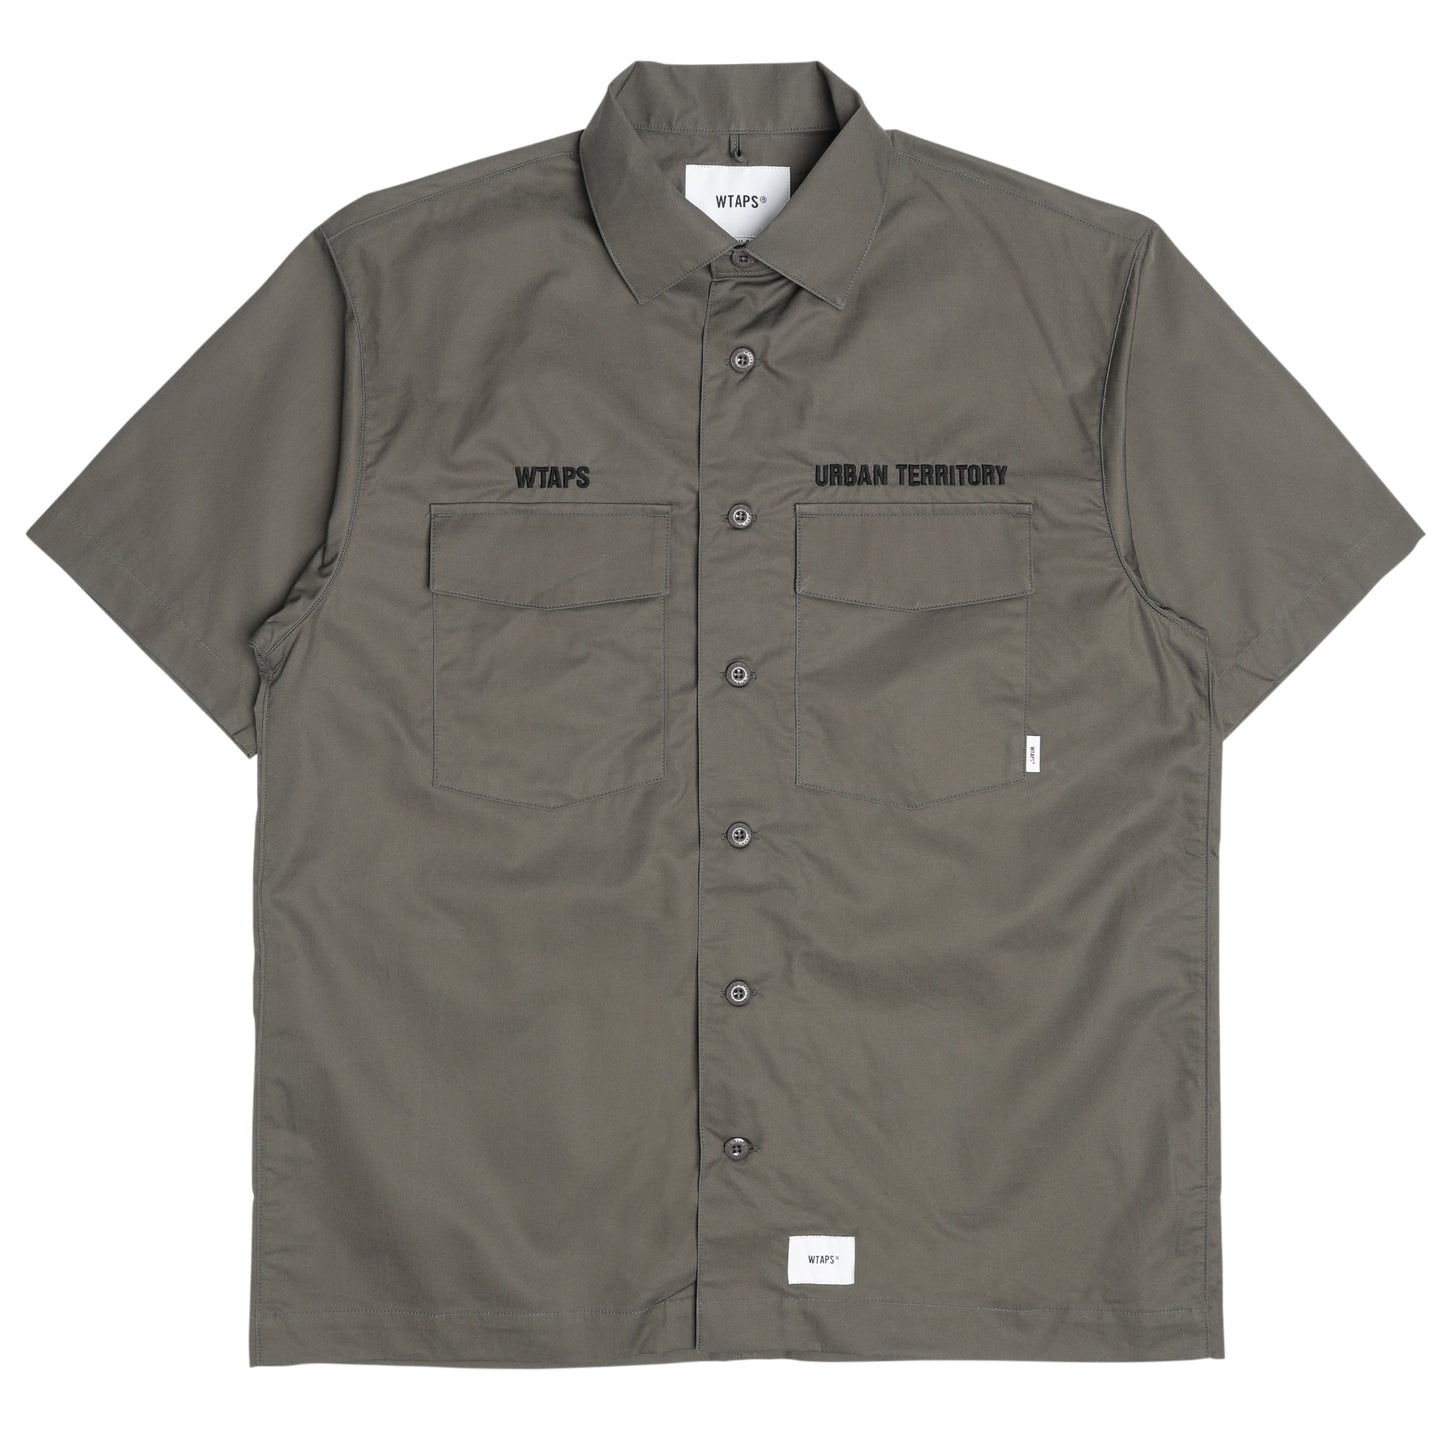 WTAPS Buds S/S Shirt Olive Drab